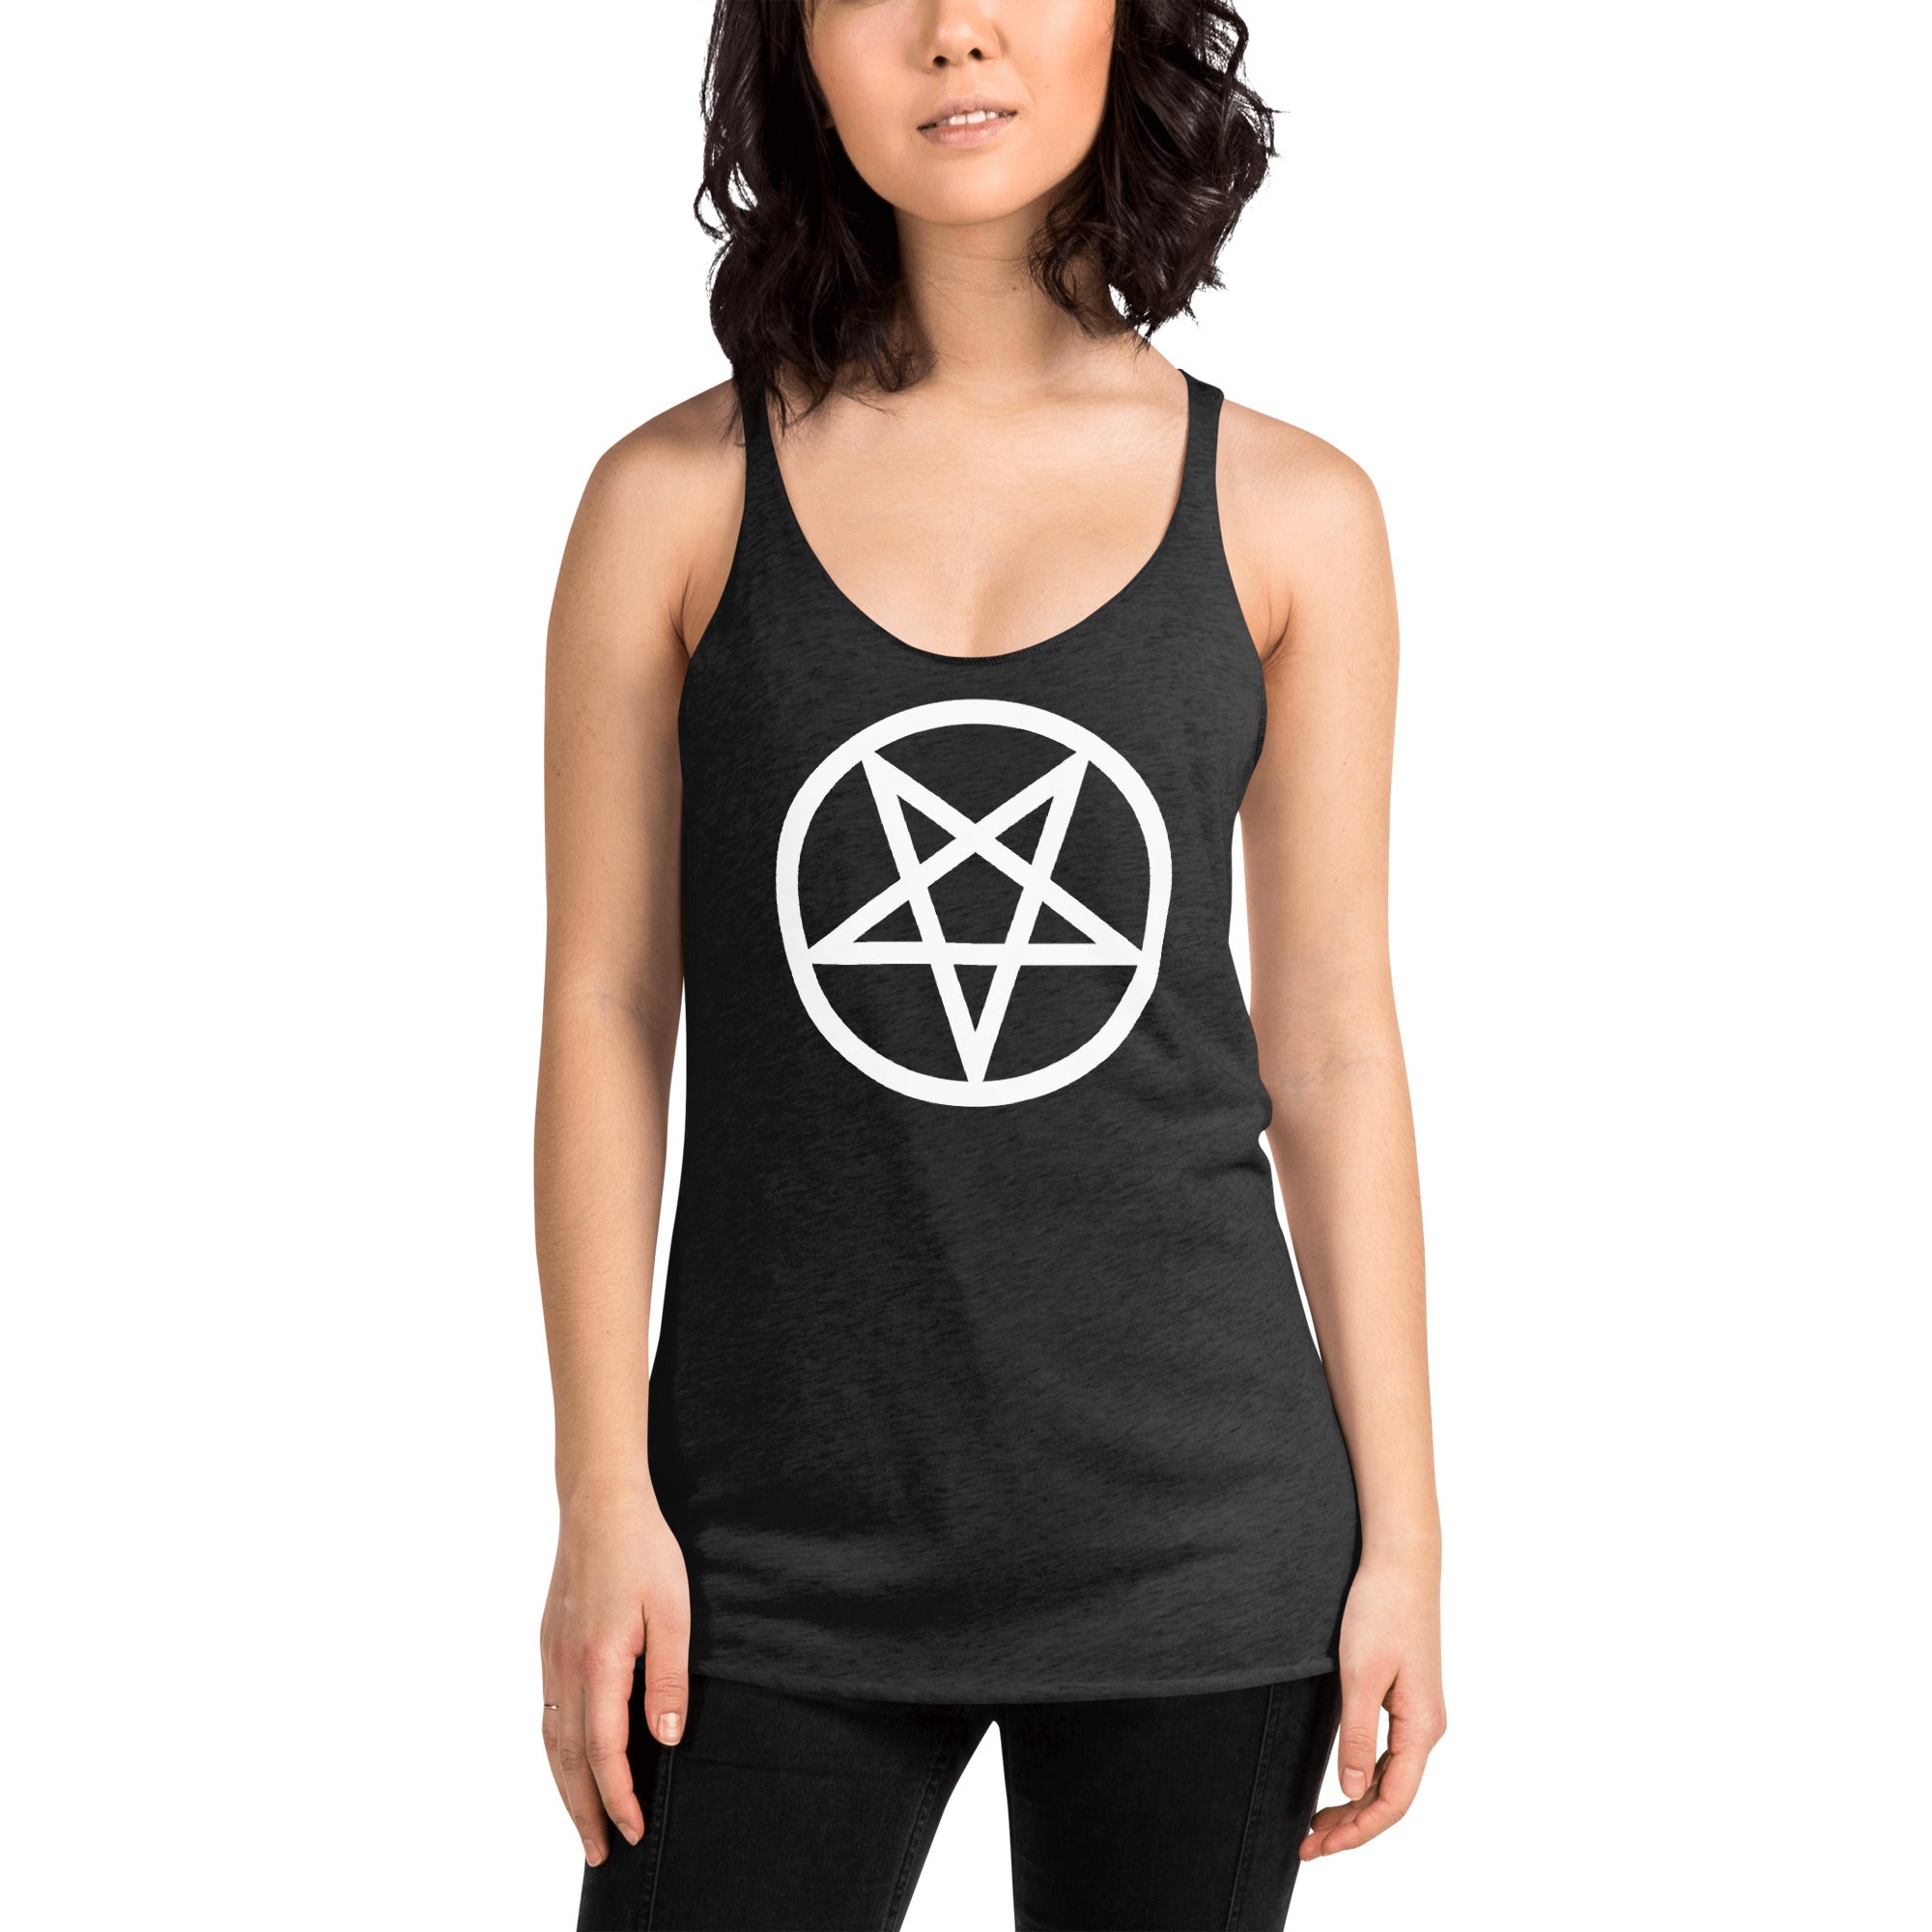 White Classic Inverted Pentagram Occult Symbol Women's Racerback Tank Top Shirt